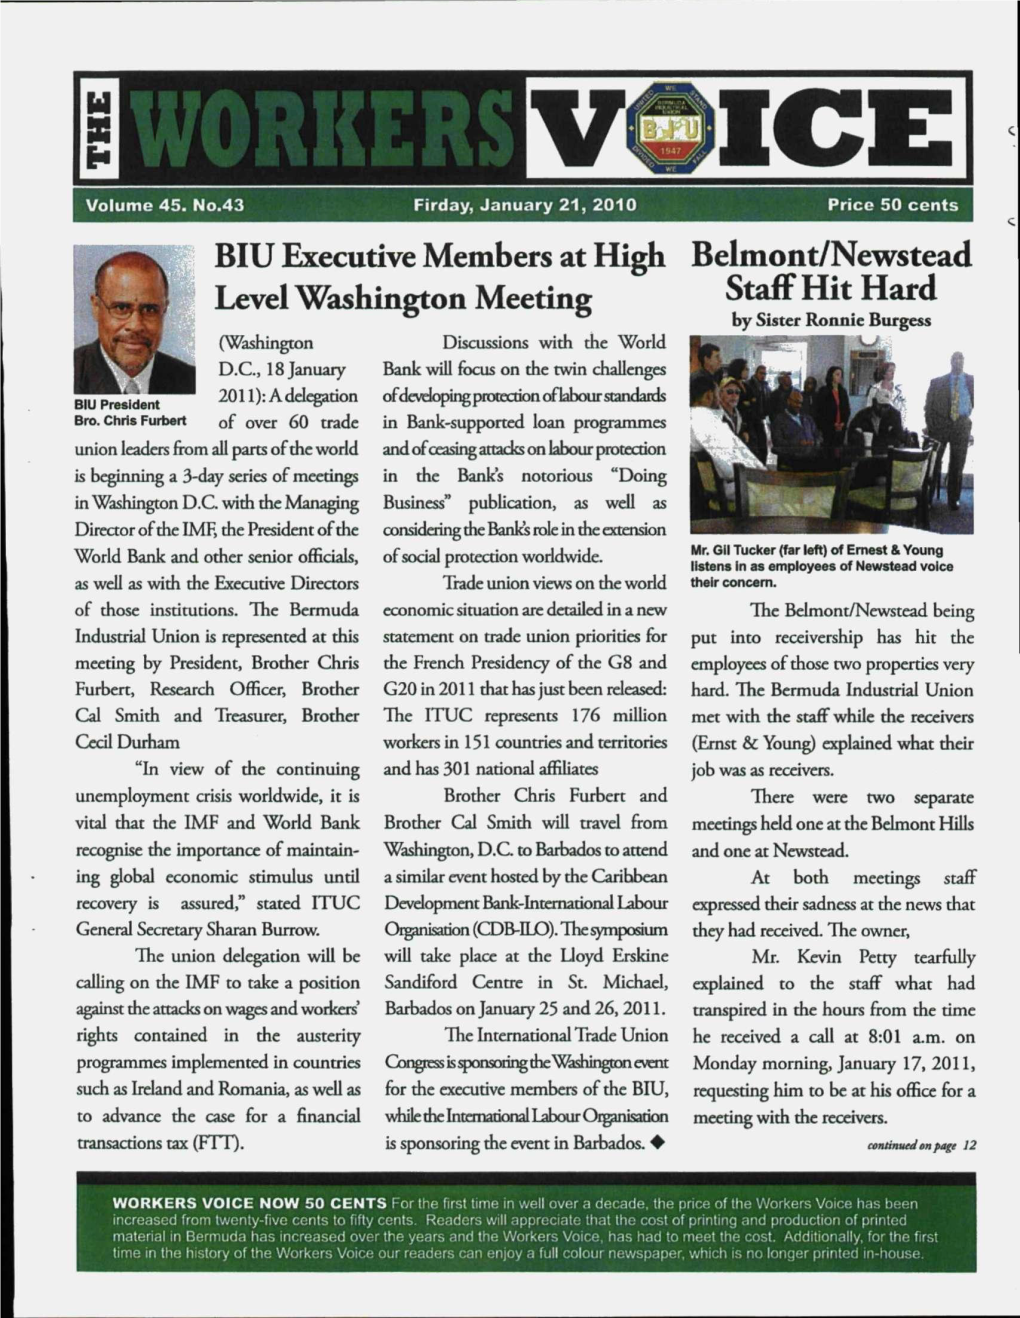 BIU Executive Members at High Level Washington Meeting Belmont